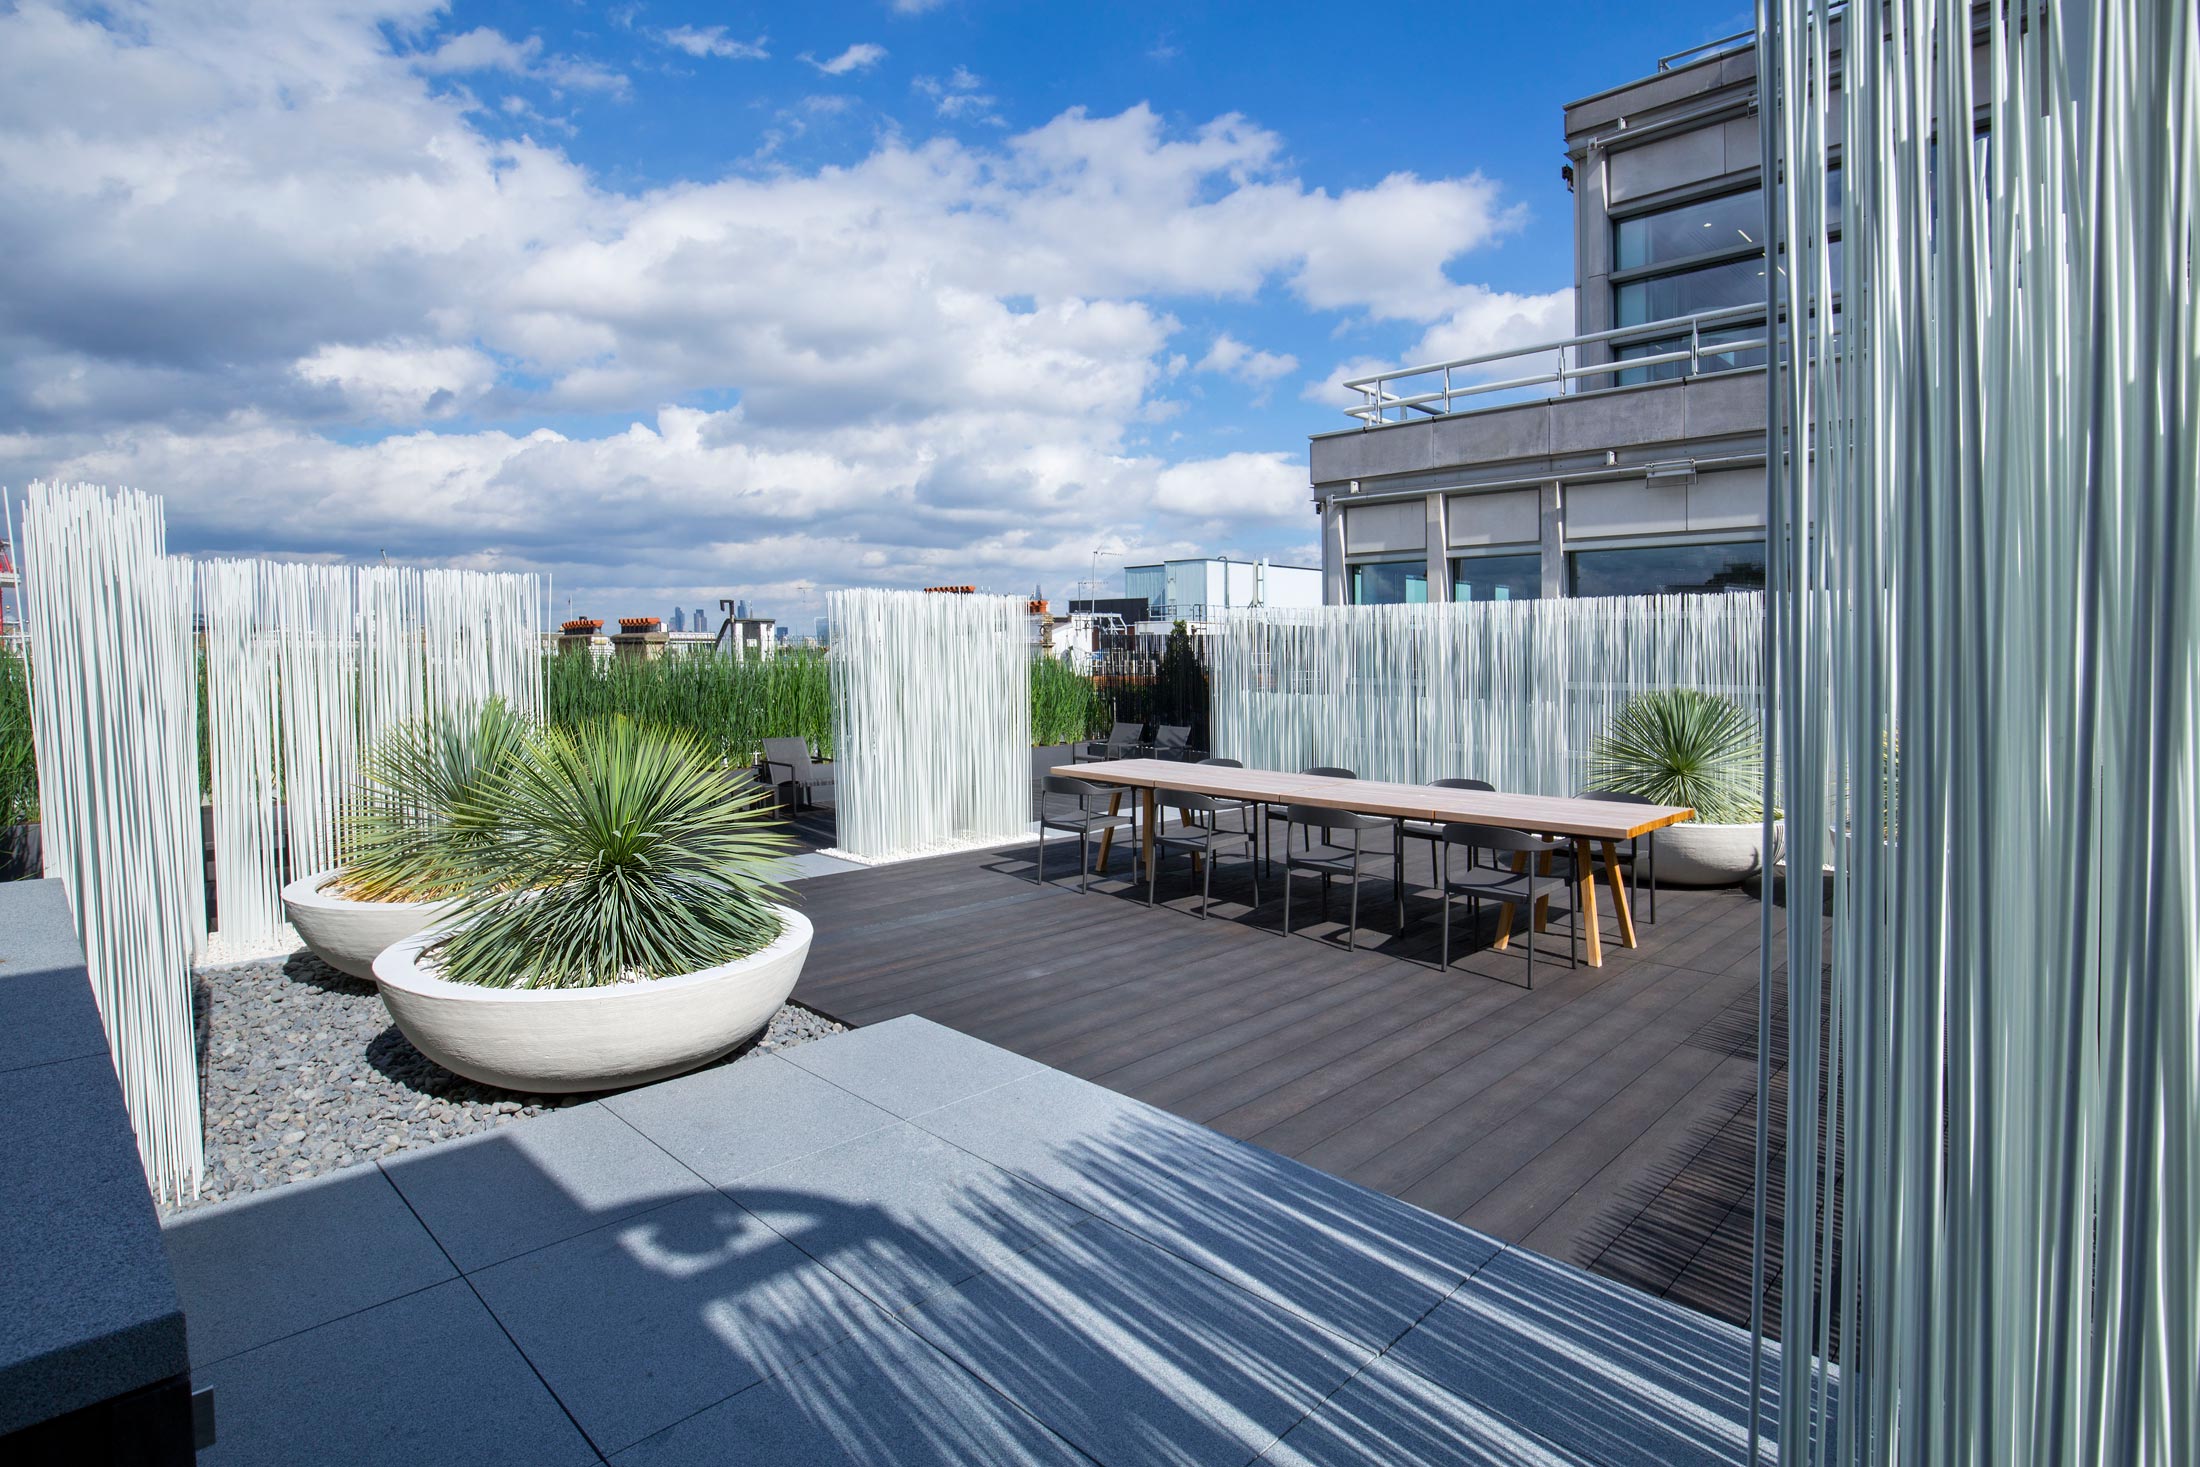 Mayfair Roof Terrace by James ALdridge Landscape and Garden Design